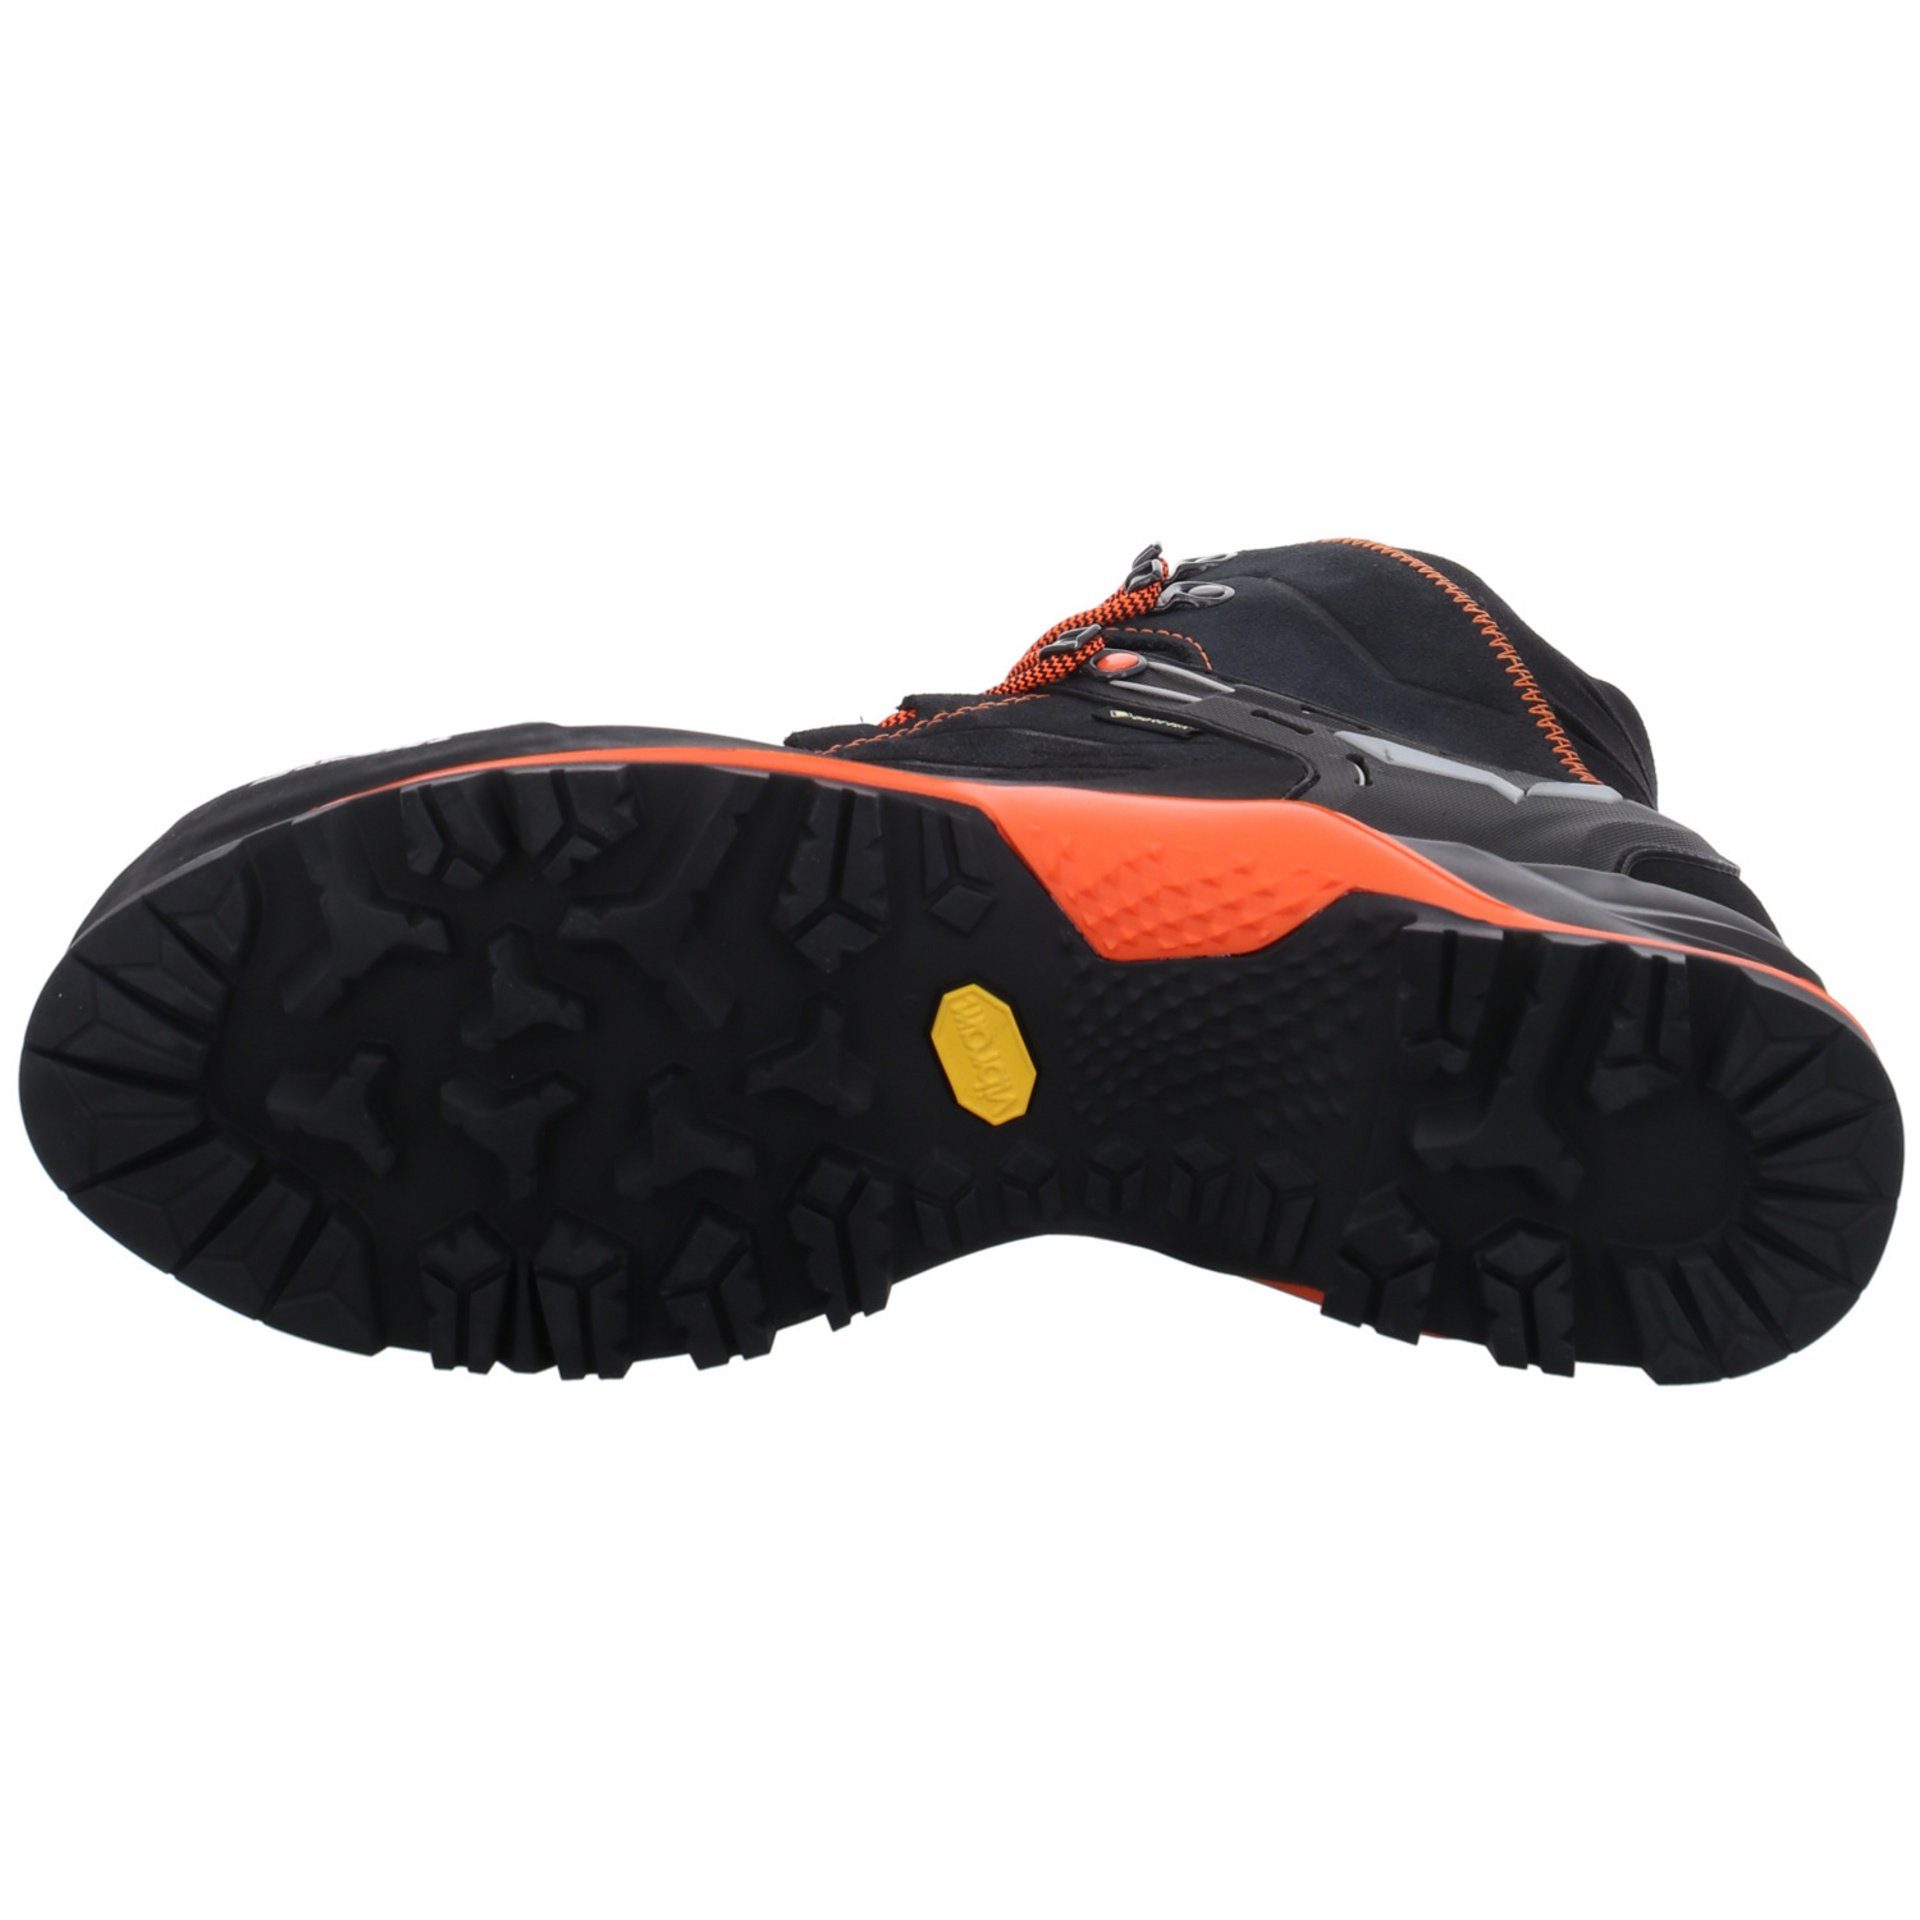 Salewa Herren Outdoor Schuhe ORANGE Leder-/Textilkombination Outdoorschuh ASPHALT/FLUO